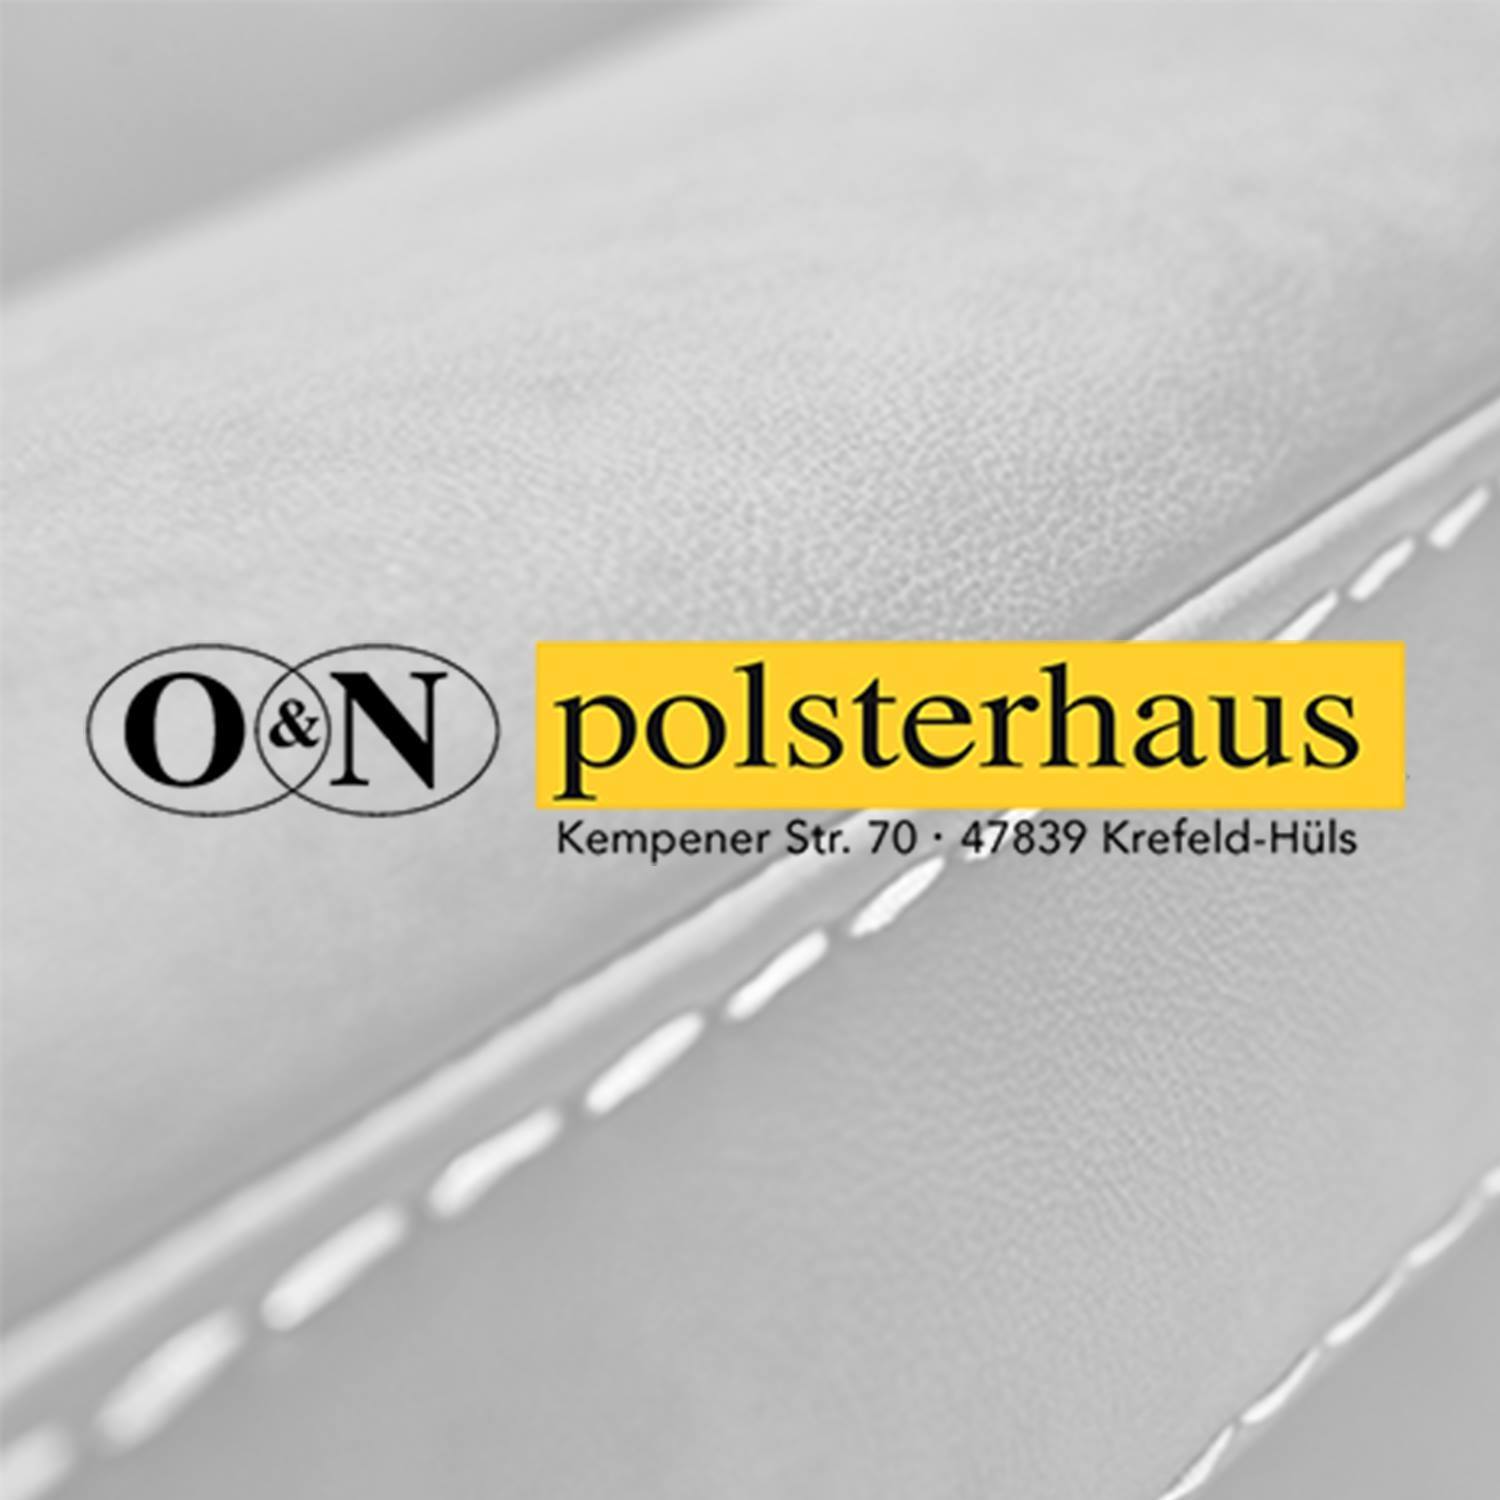 O & N Polsterhaus Nellessen GmbH & Co. KG in Krefeld